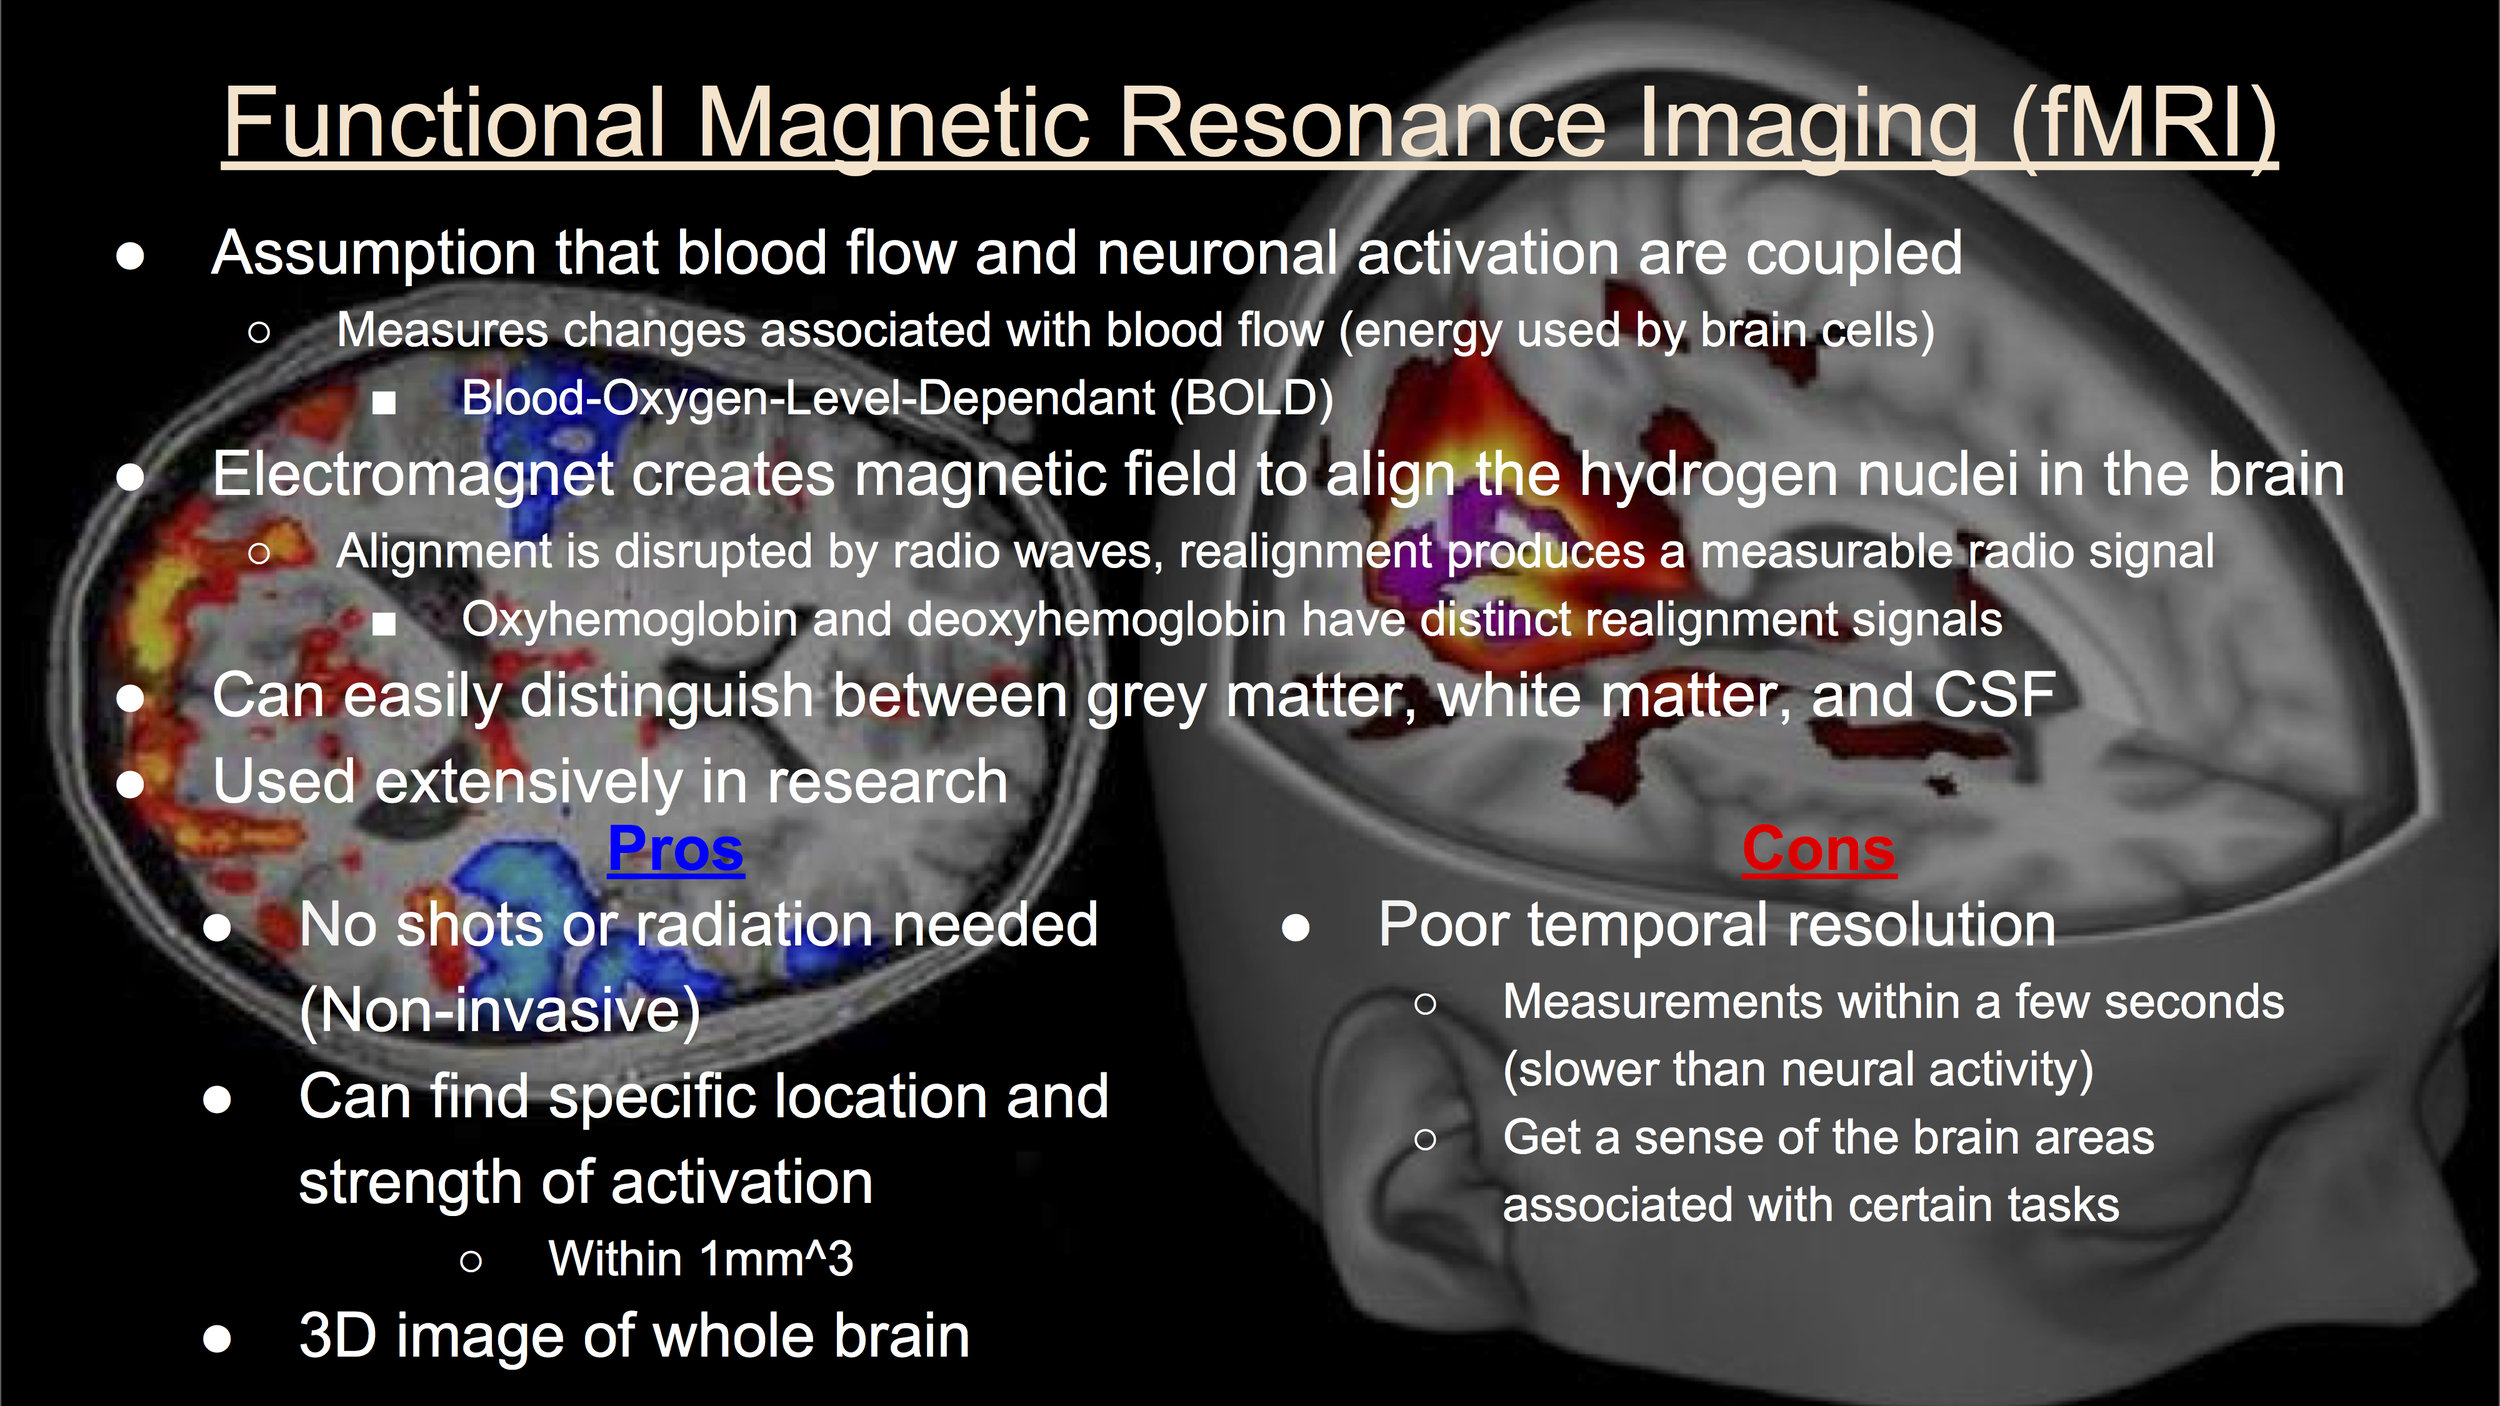 Functional NeuroImaging Techniques (fMRI).jpg